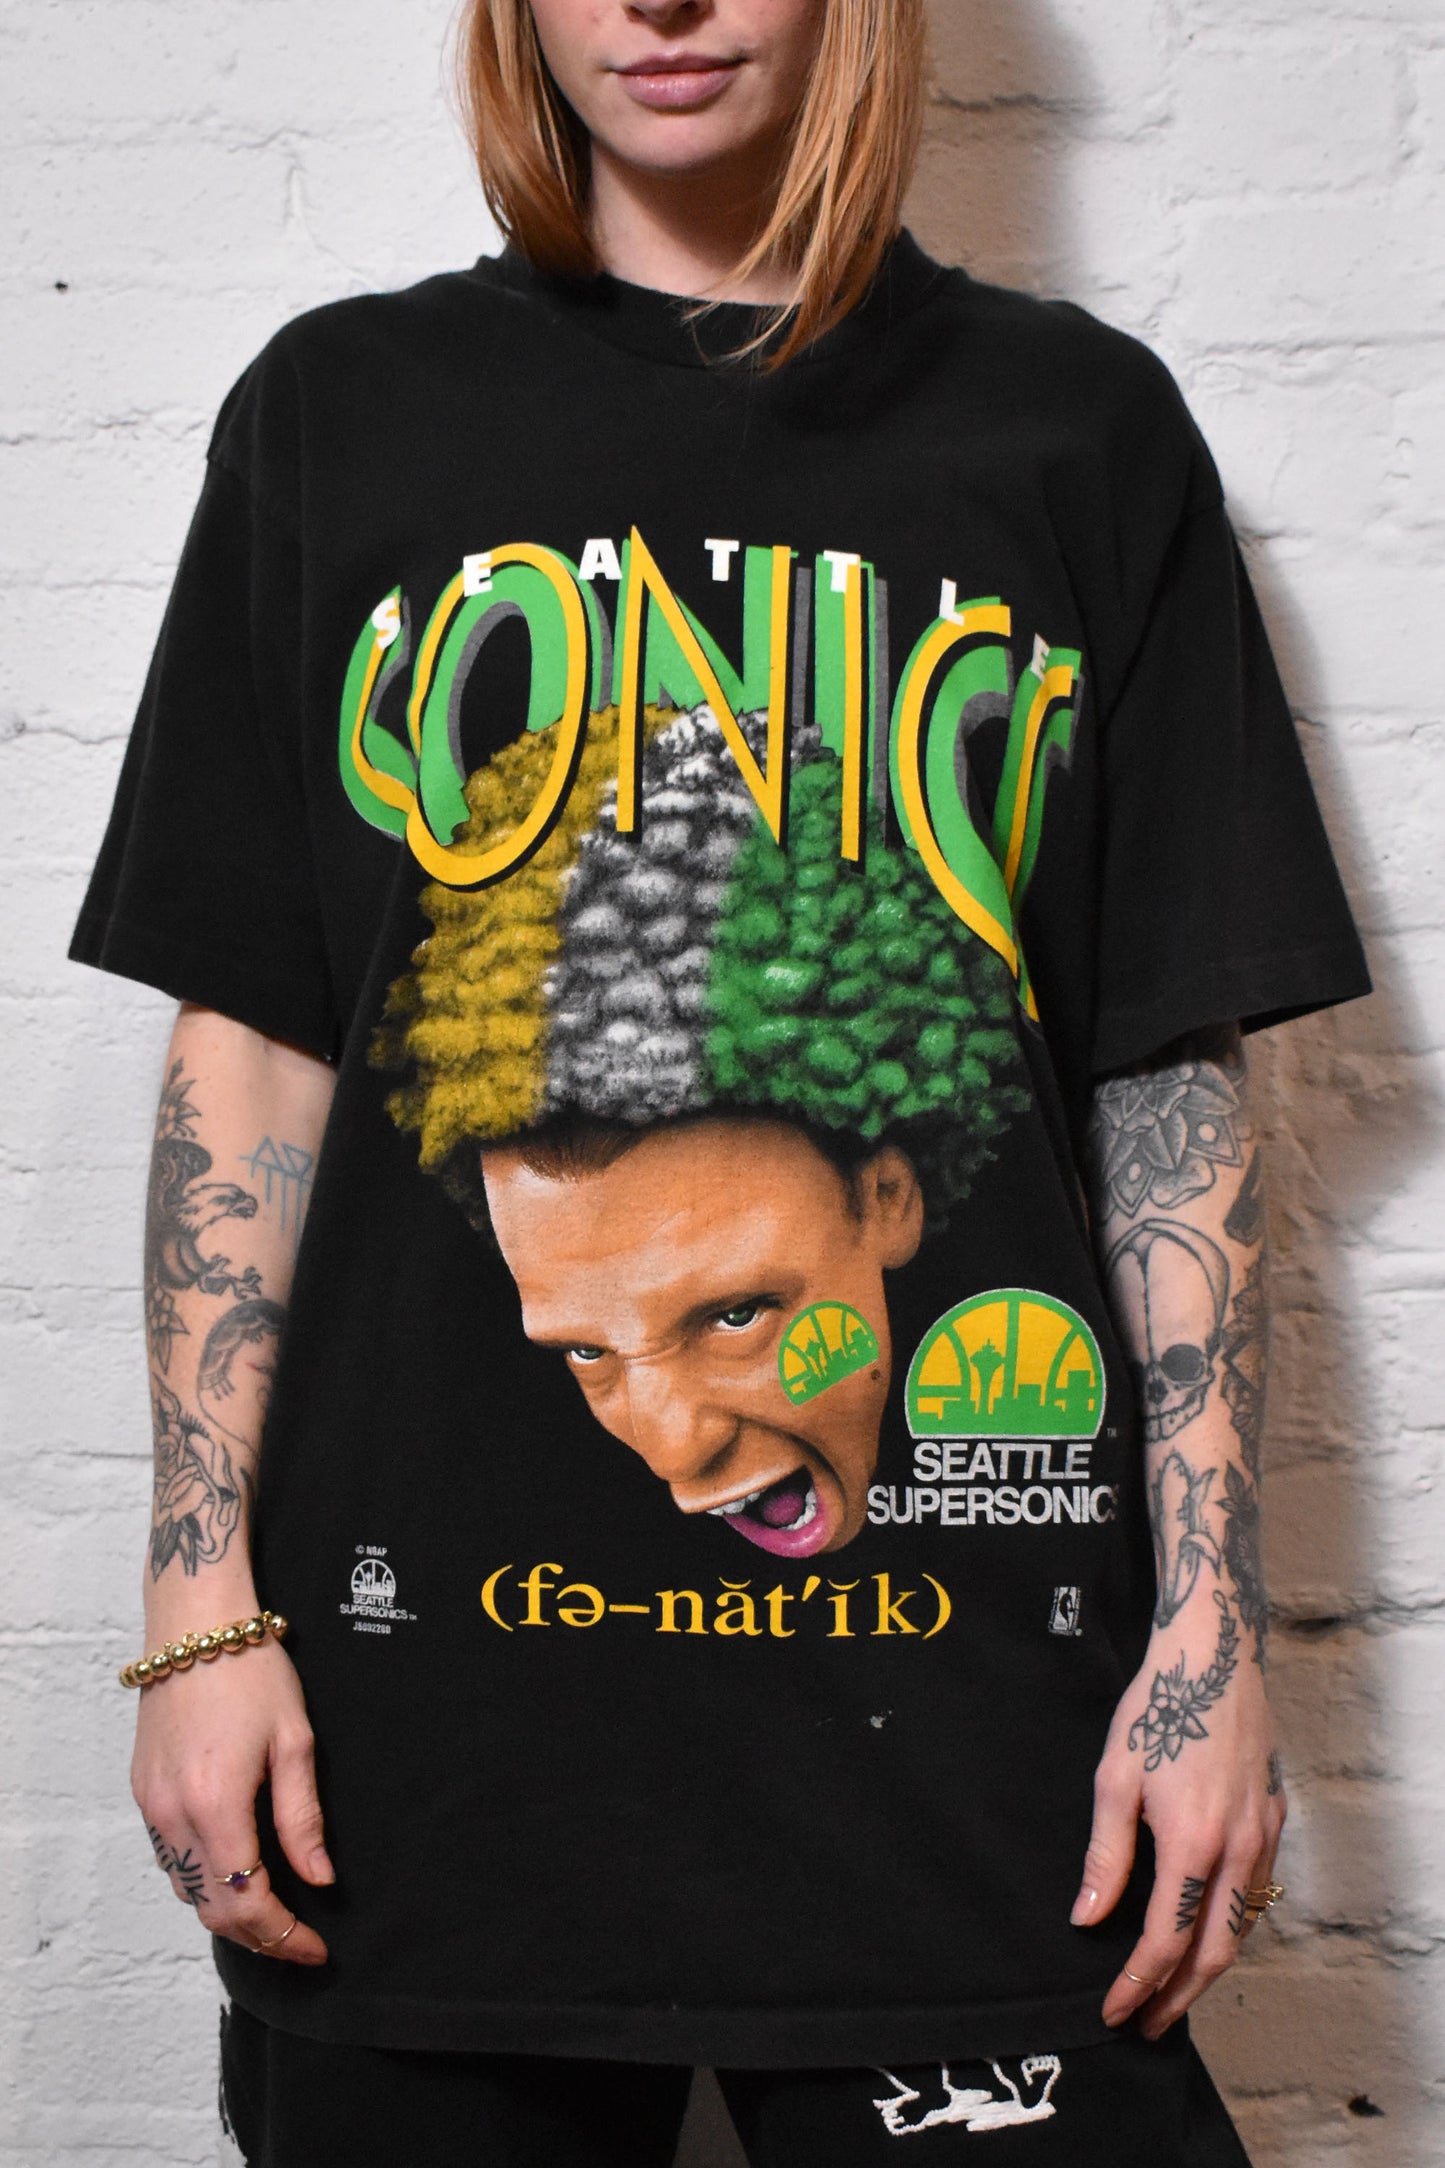 Vintage 1990s "Seattle Sonics" Super Fan T-shirt